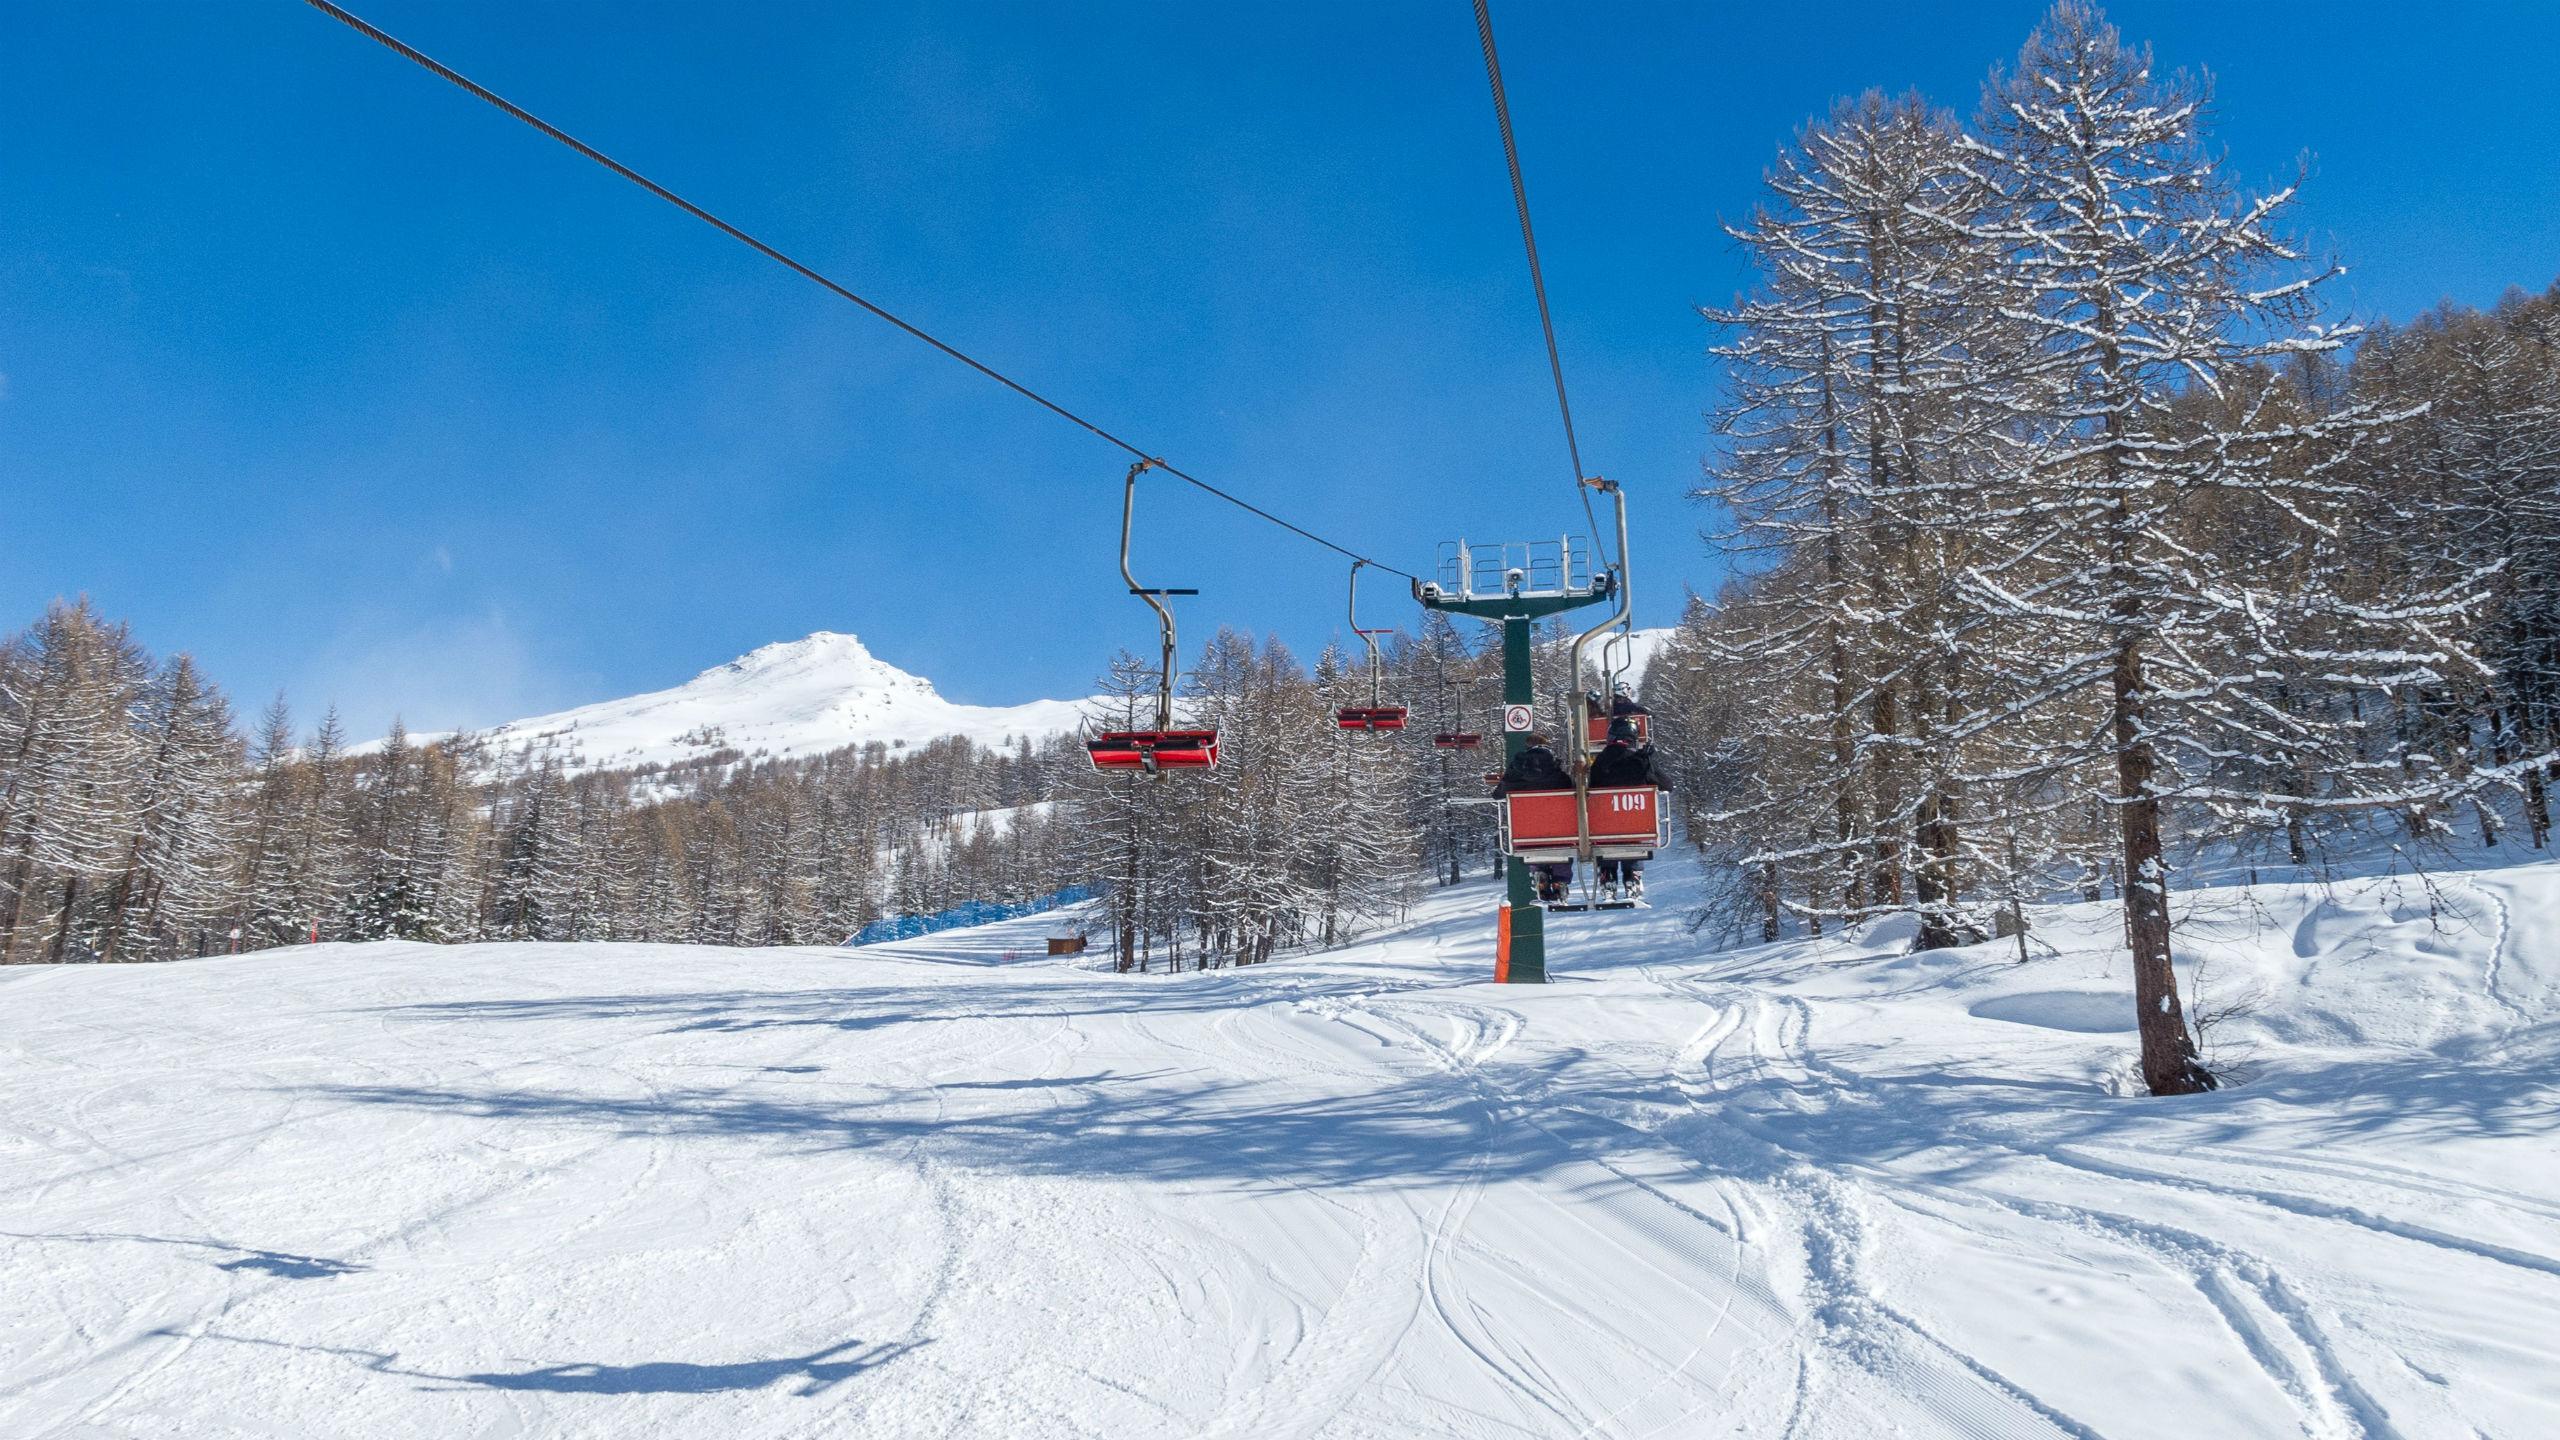 two skiers on a beginner ski lift in bardonecchia